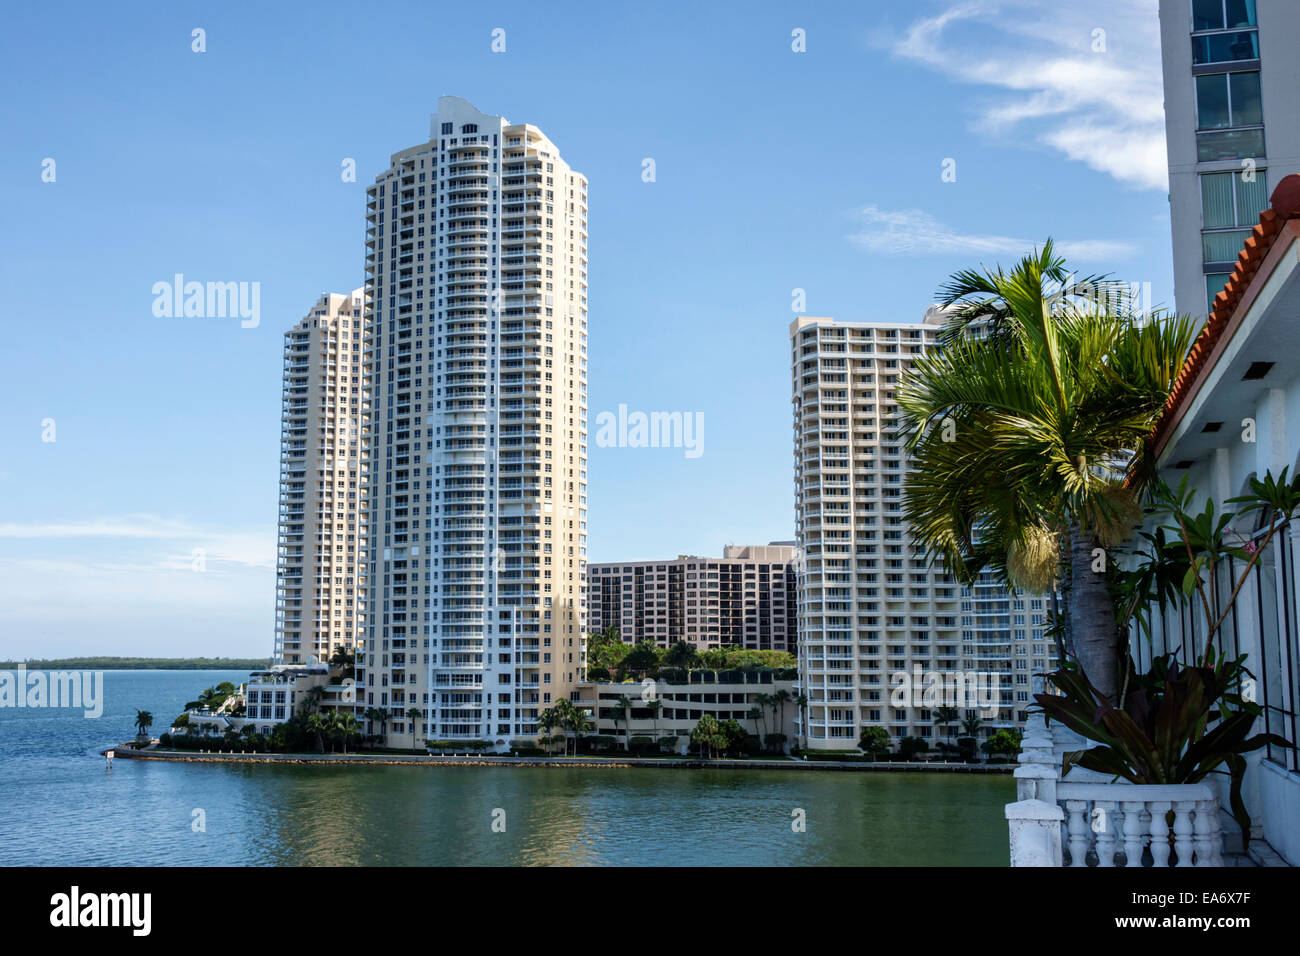 Miami Florida,Biscayne Bay,water,Brickell Key,high rise,condominium buildings,Miami River,FL140808014 Stock Photo